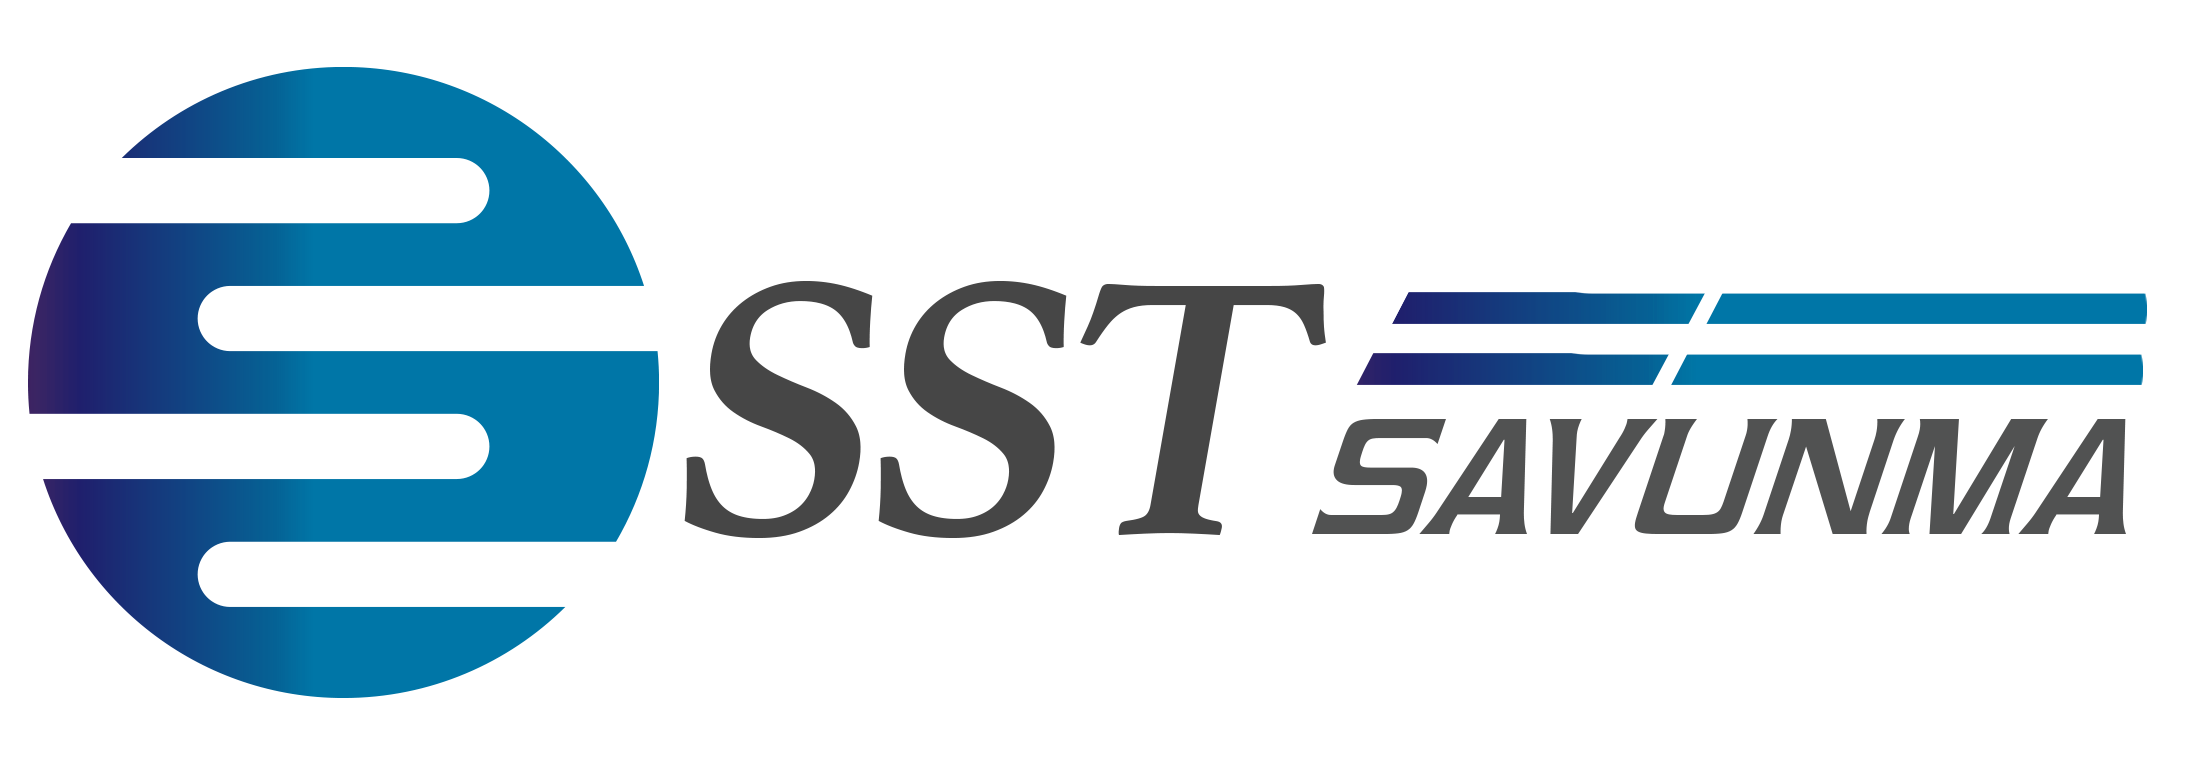 sst-savunma-logo copy